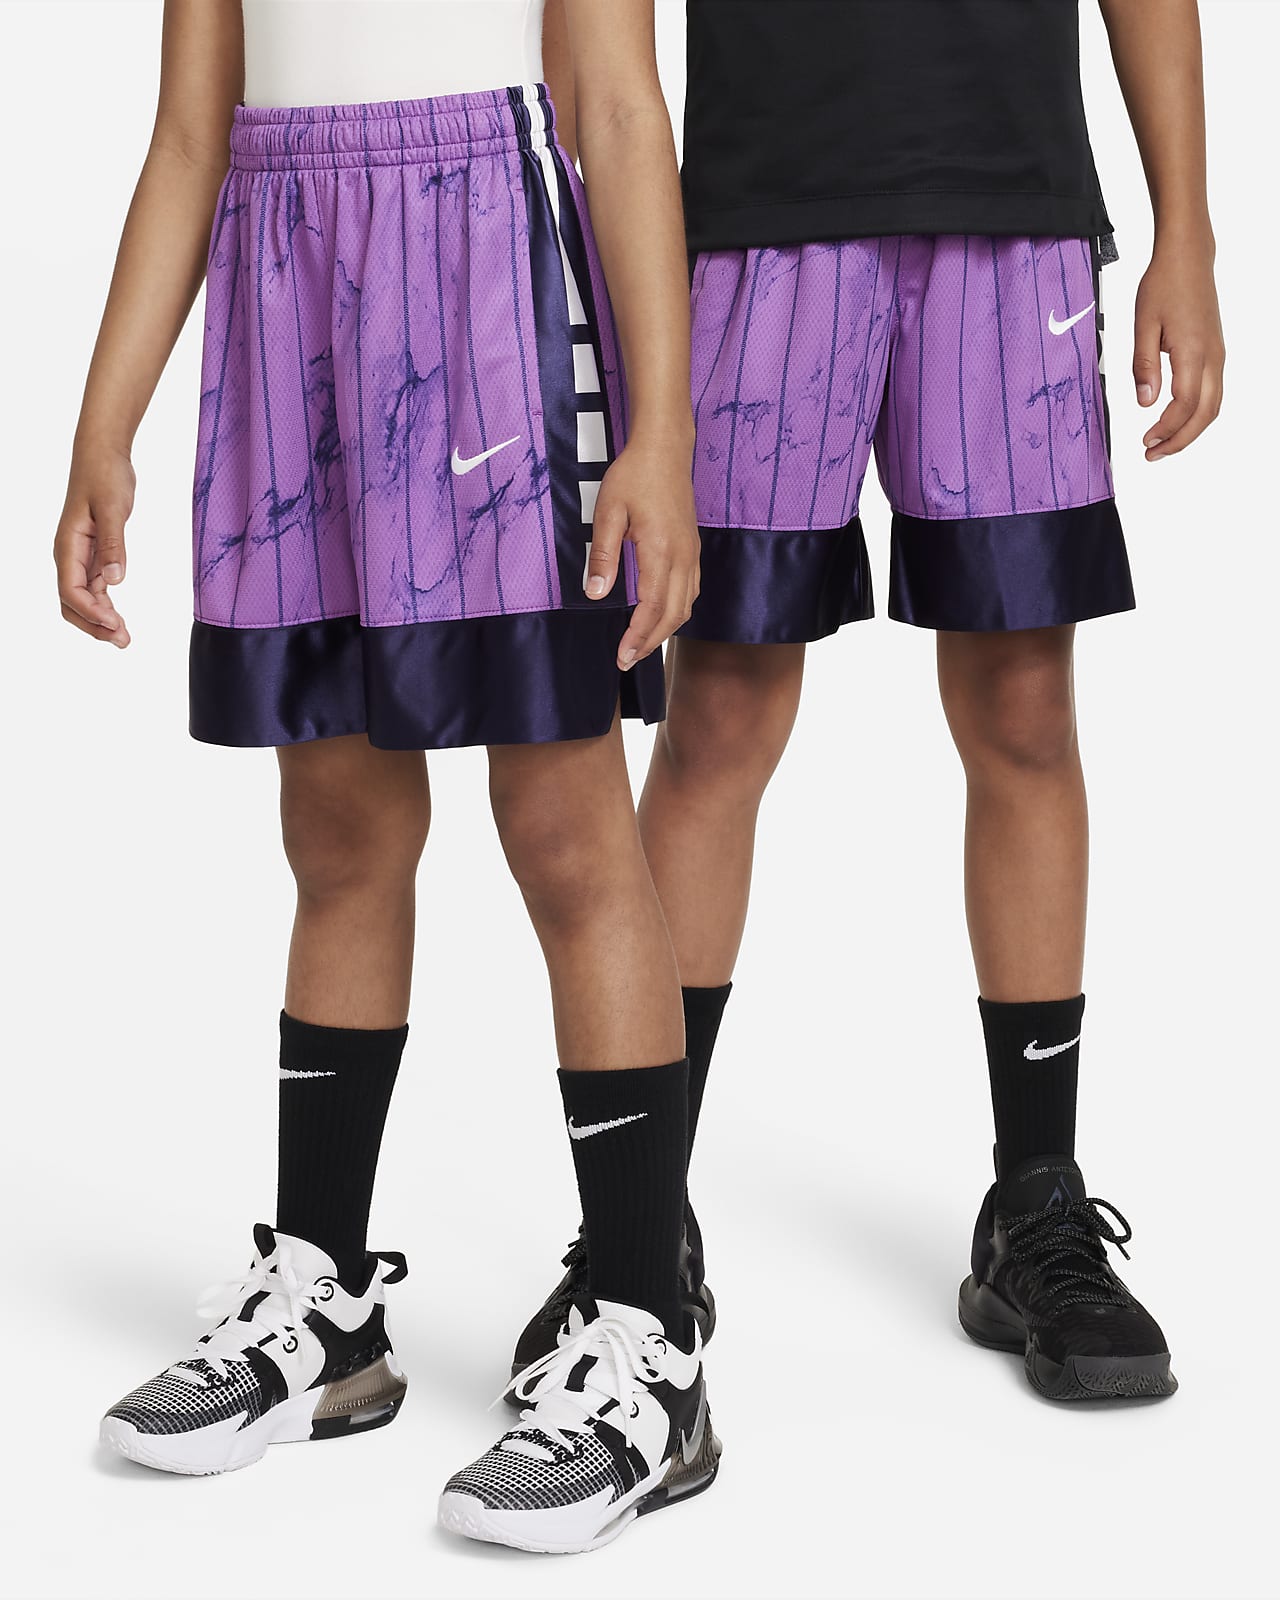 Nike, Shirts & Tops, Boys Nike Elite Basketball Shirt